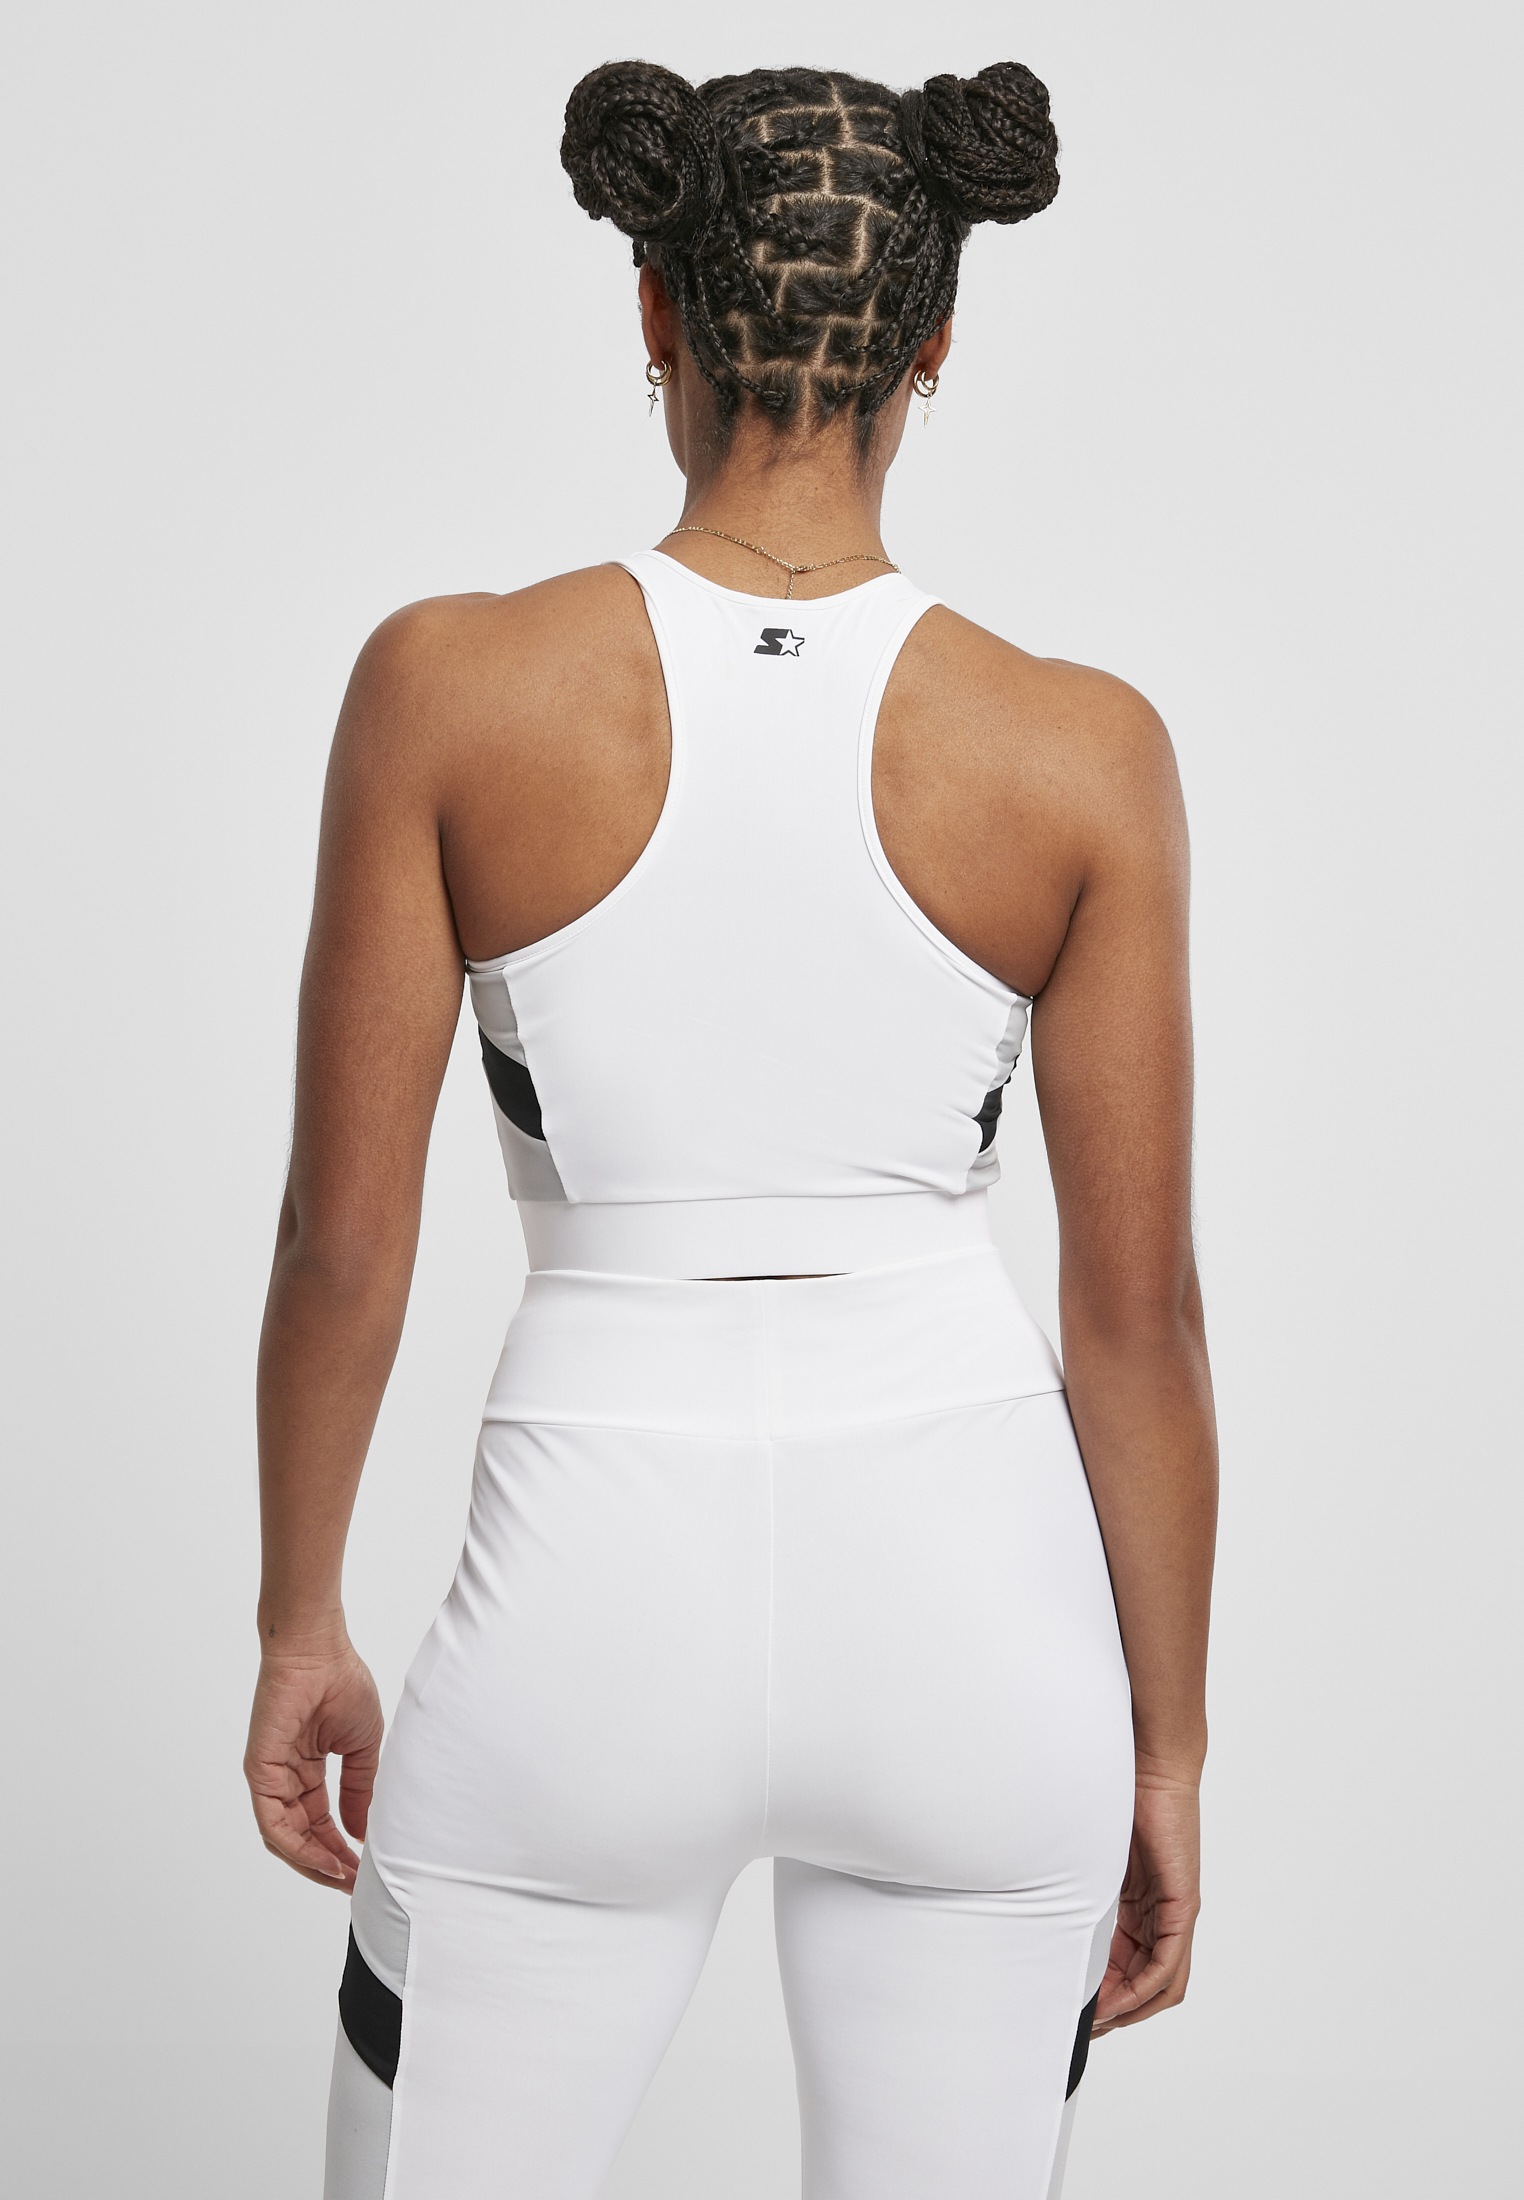 Starter Black Label Sport-BH »Starter Black Label Damen Ladies Starter Sports Cropped Top«